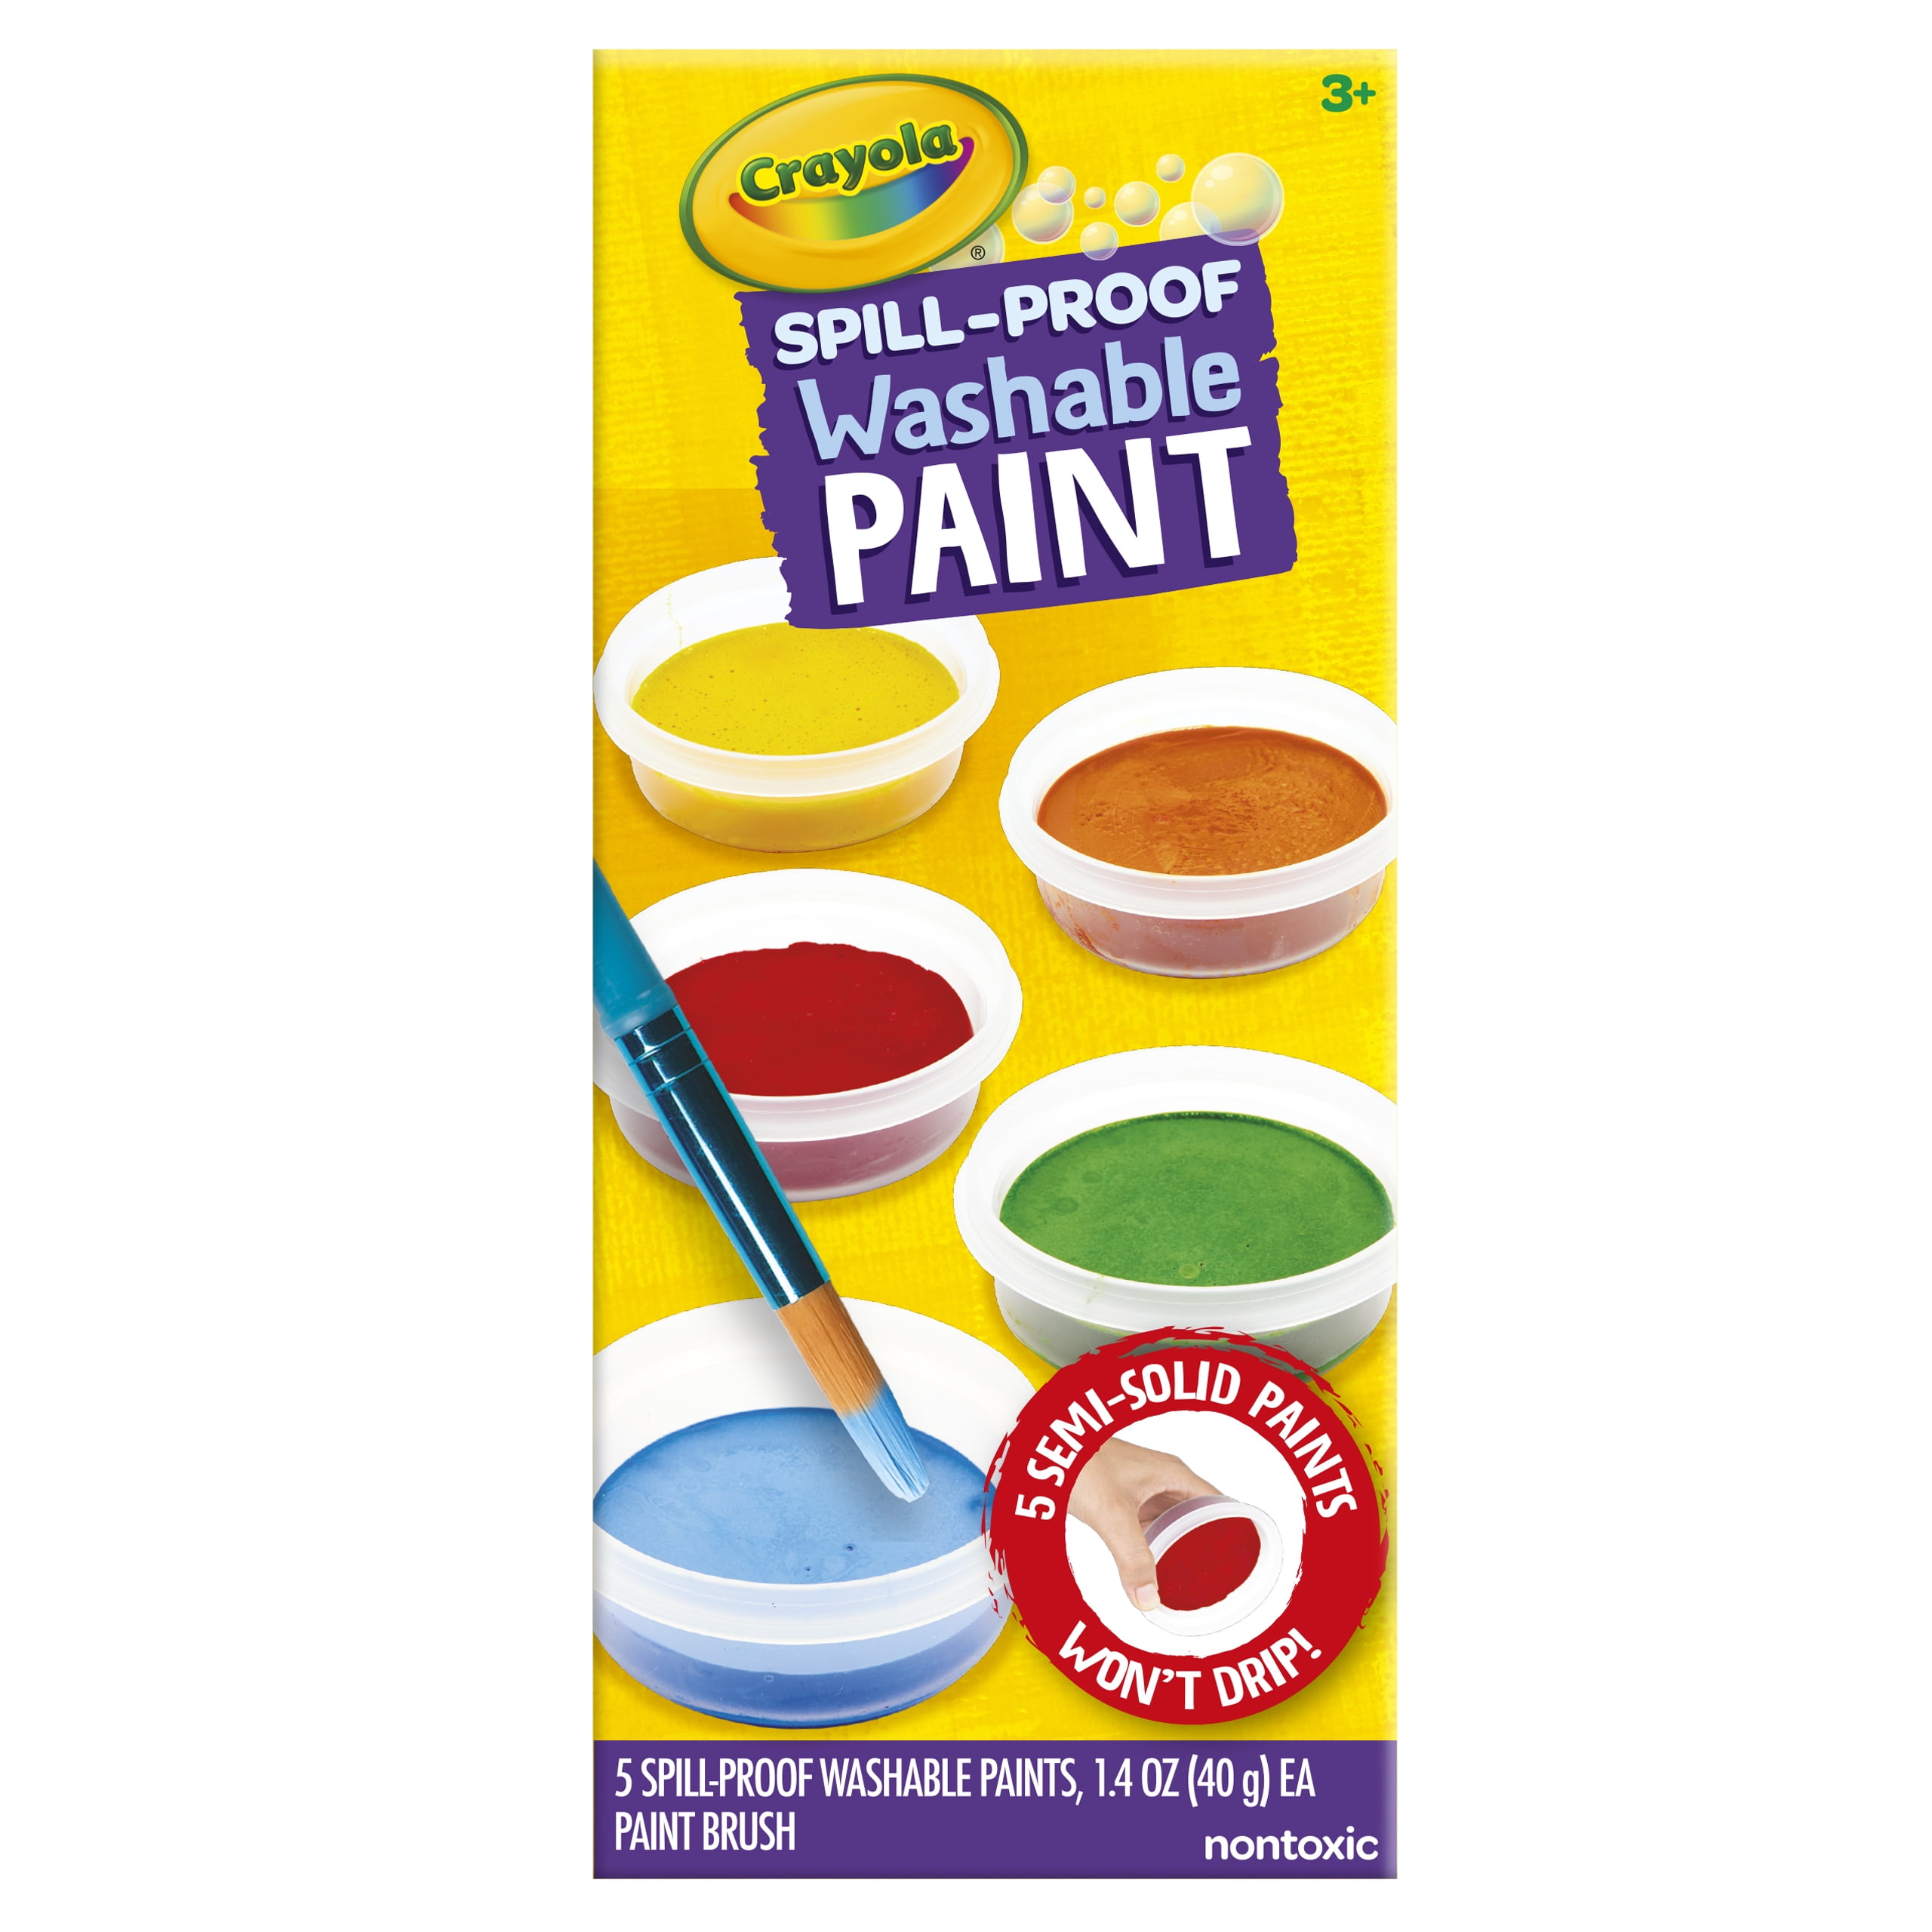 Spill-Proof Washable 4 Paint & Activity Set, Crayola.com